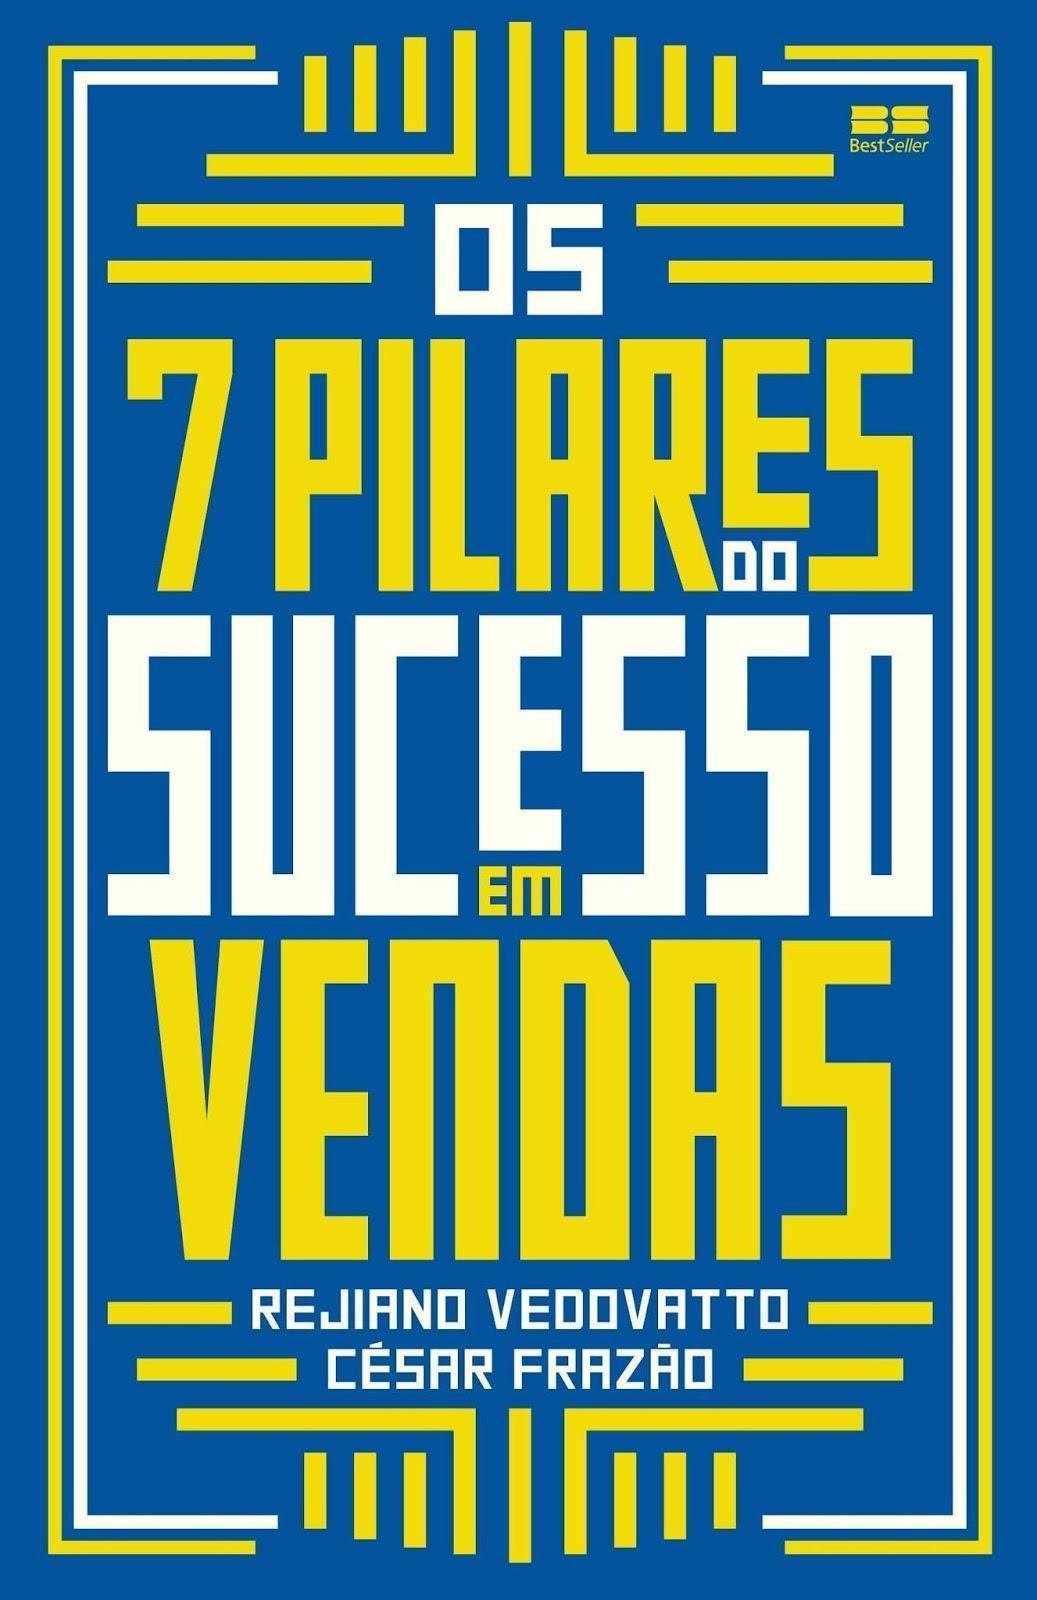 Book 'The 7 Pillars of Succesful Sales'